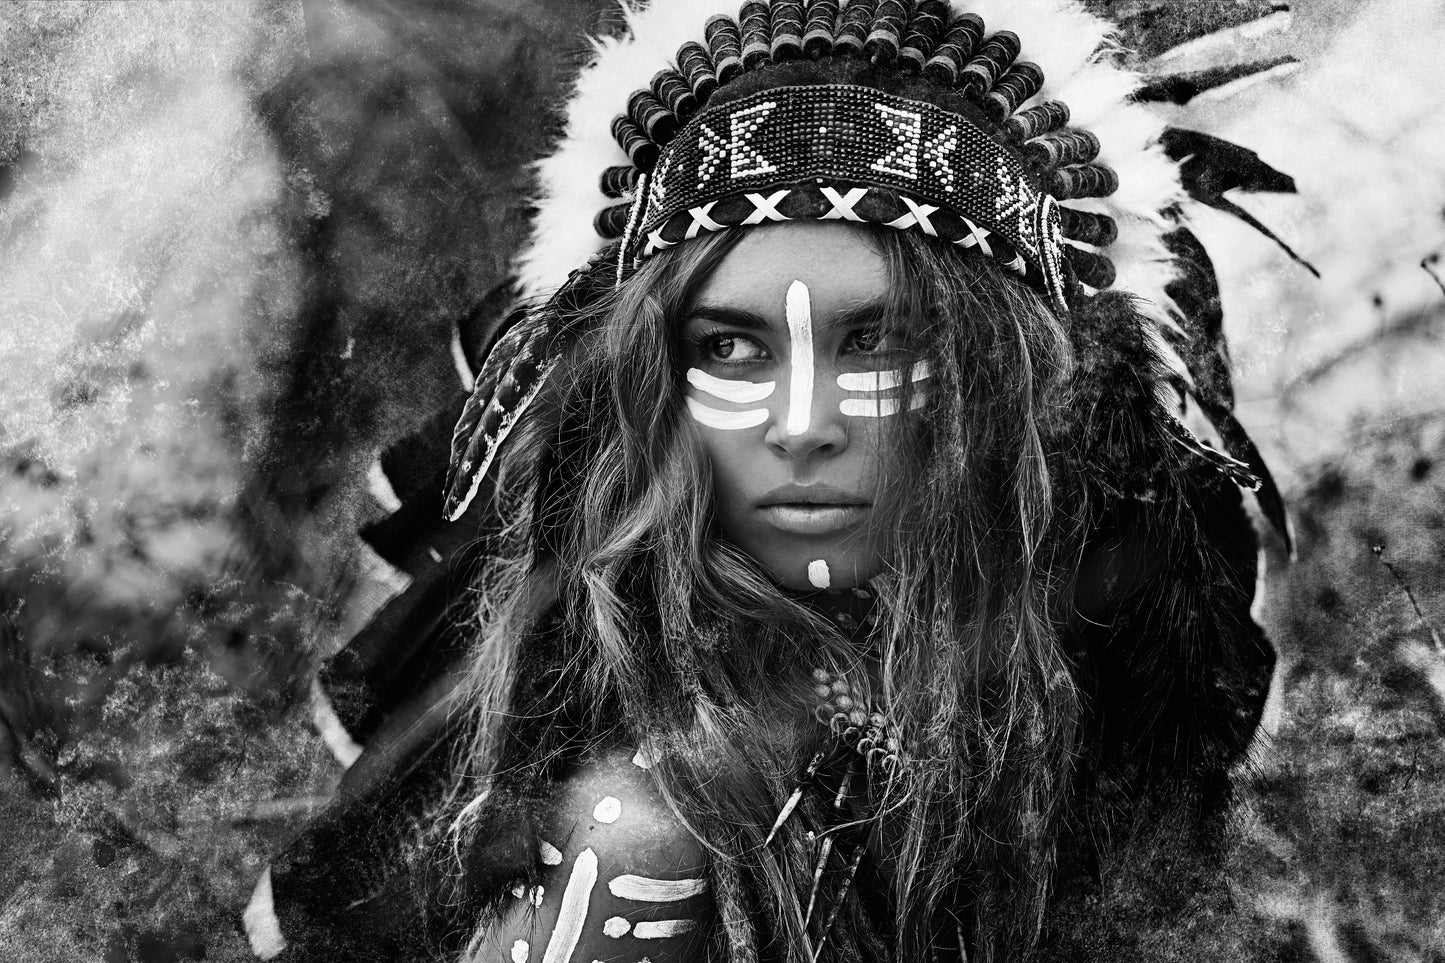 Warrior Girl with Feather Headdress B&W Photograph Print 100% Australian Made